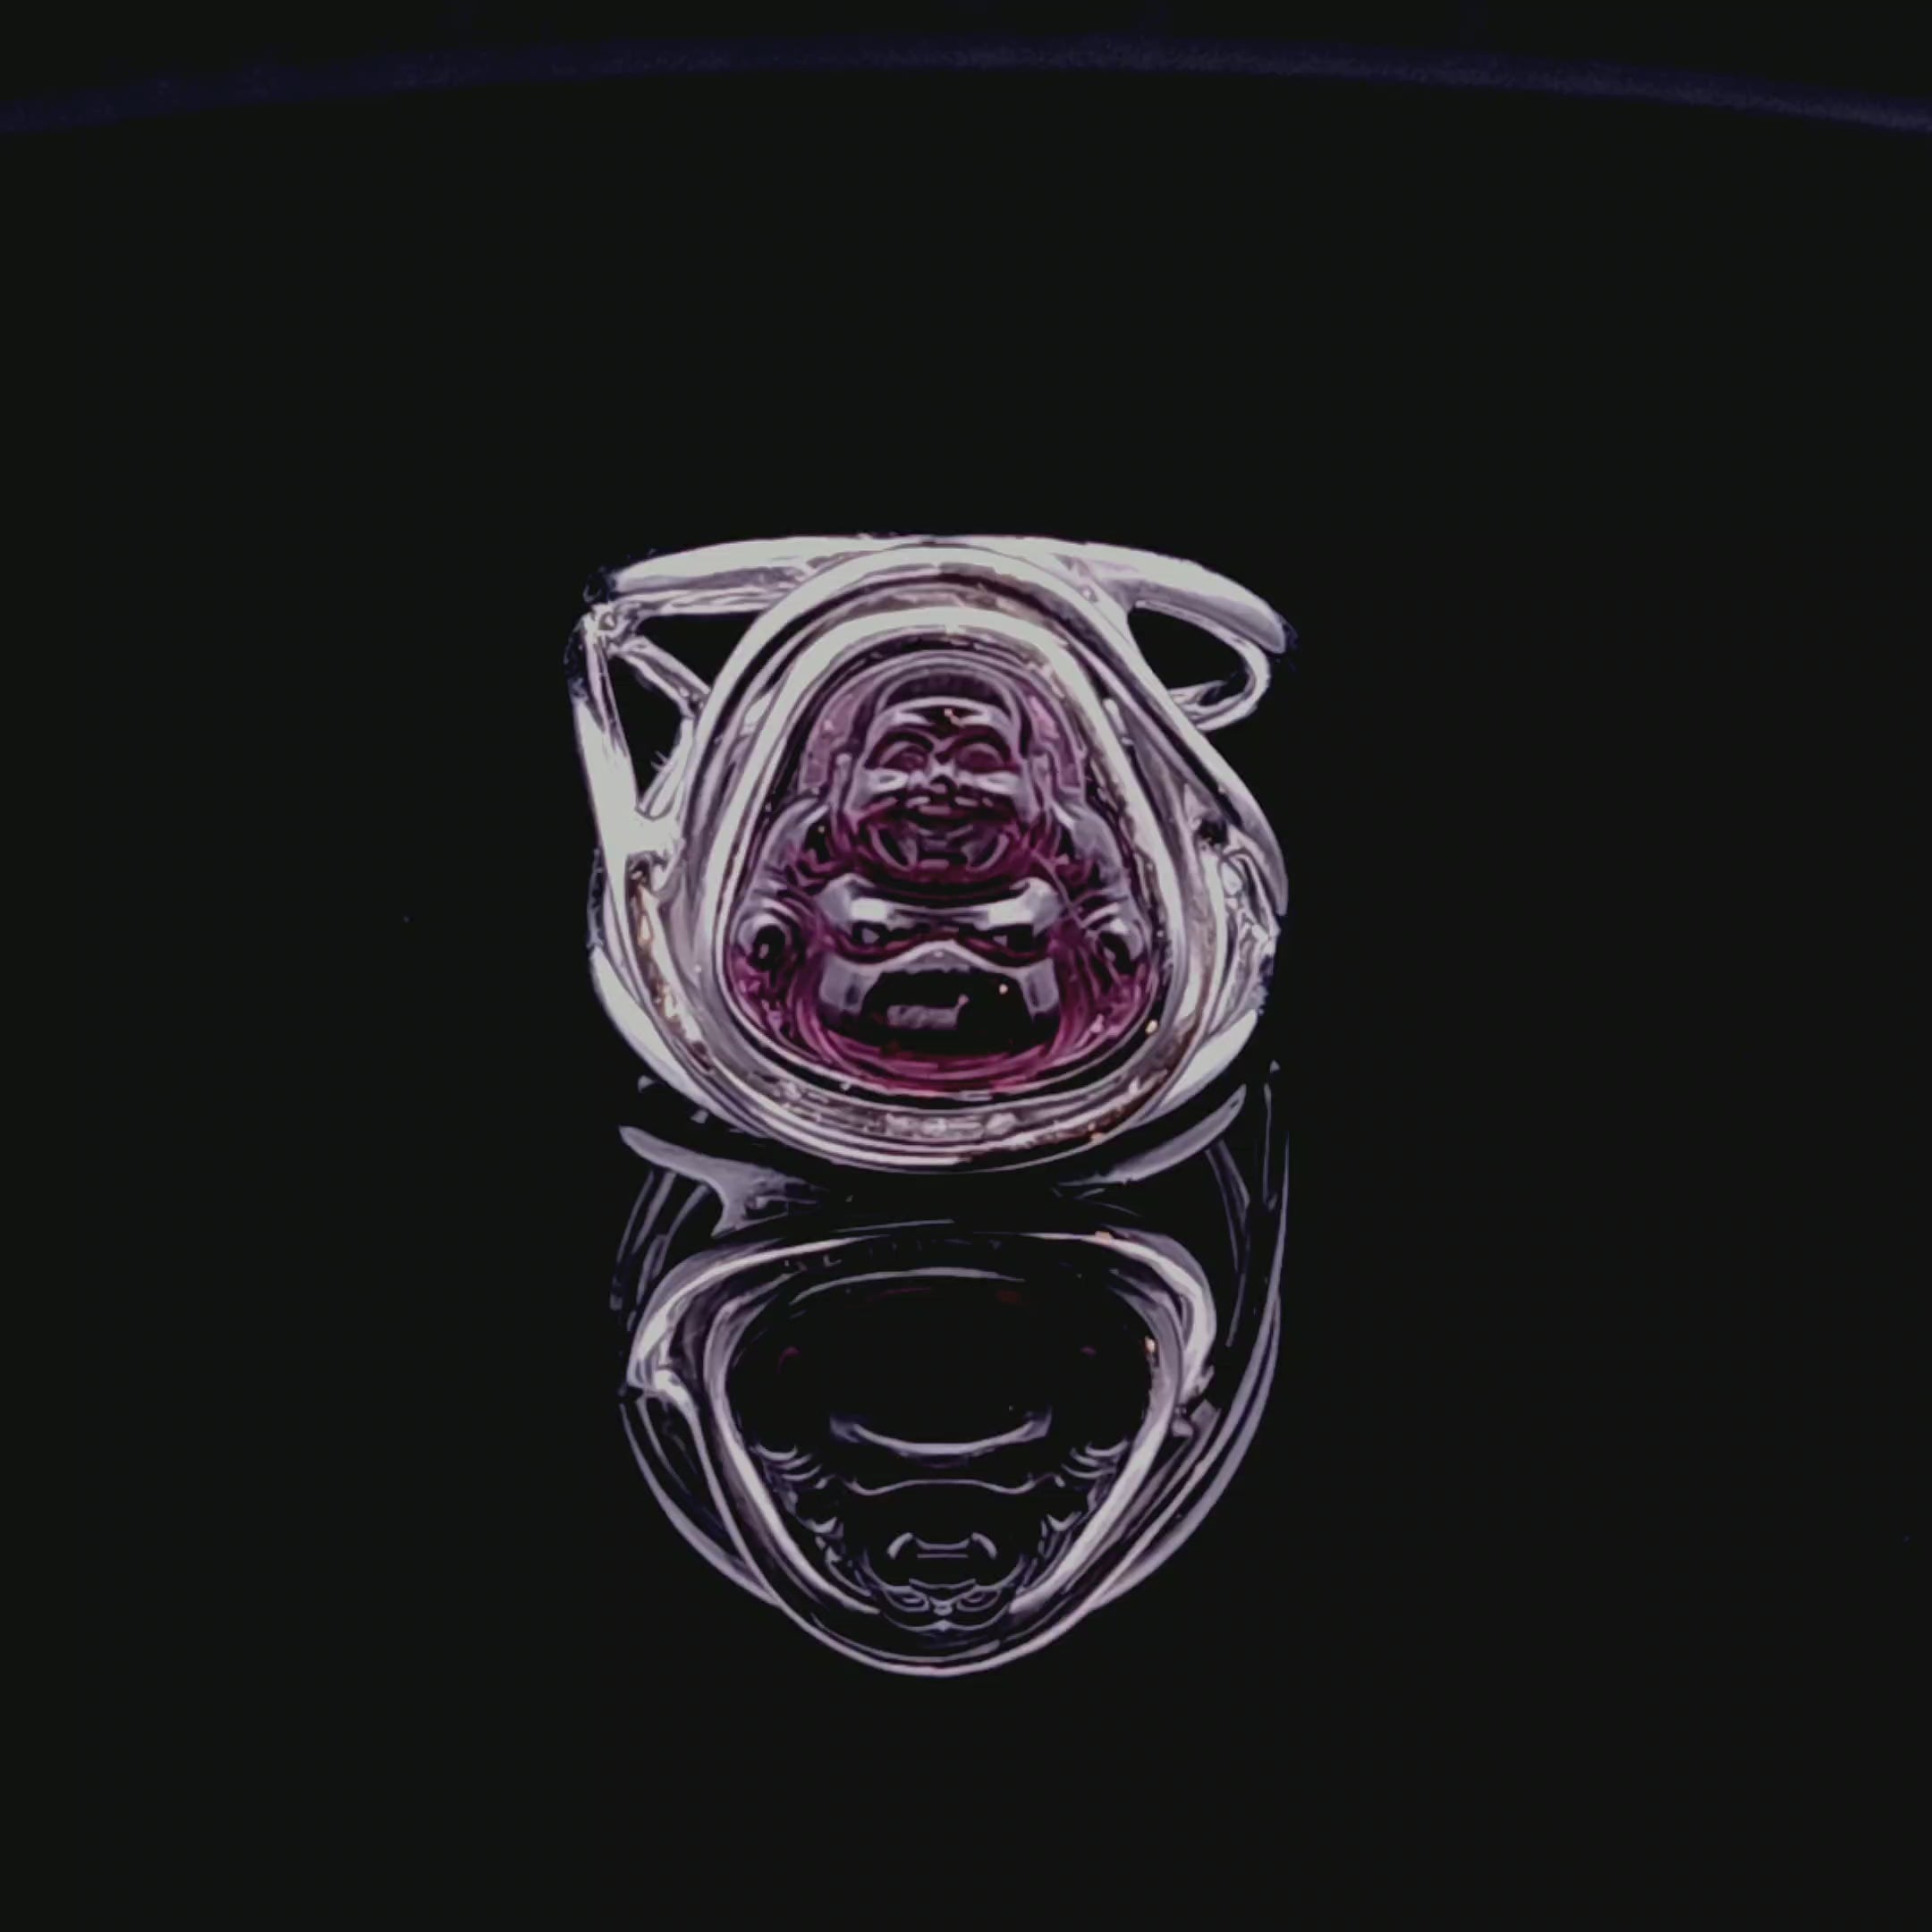 Rhodolite Garnet Buddha Adjustable Finger Cuff Ring .925 Silver for Expressing Love, Joy and Harmony